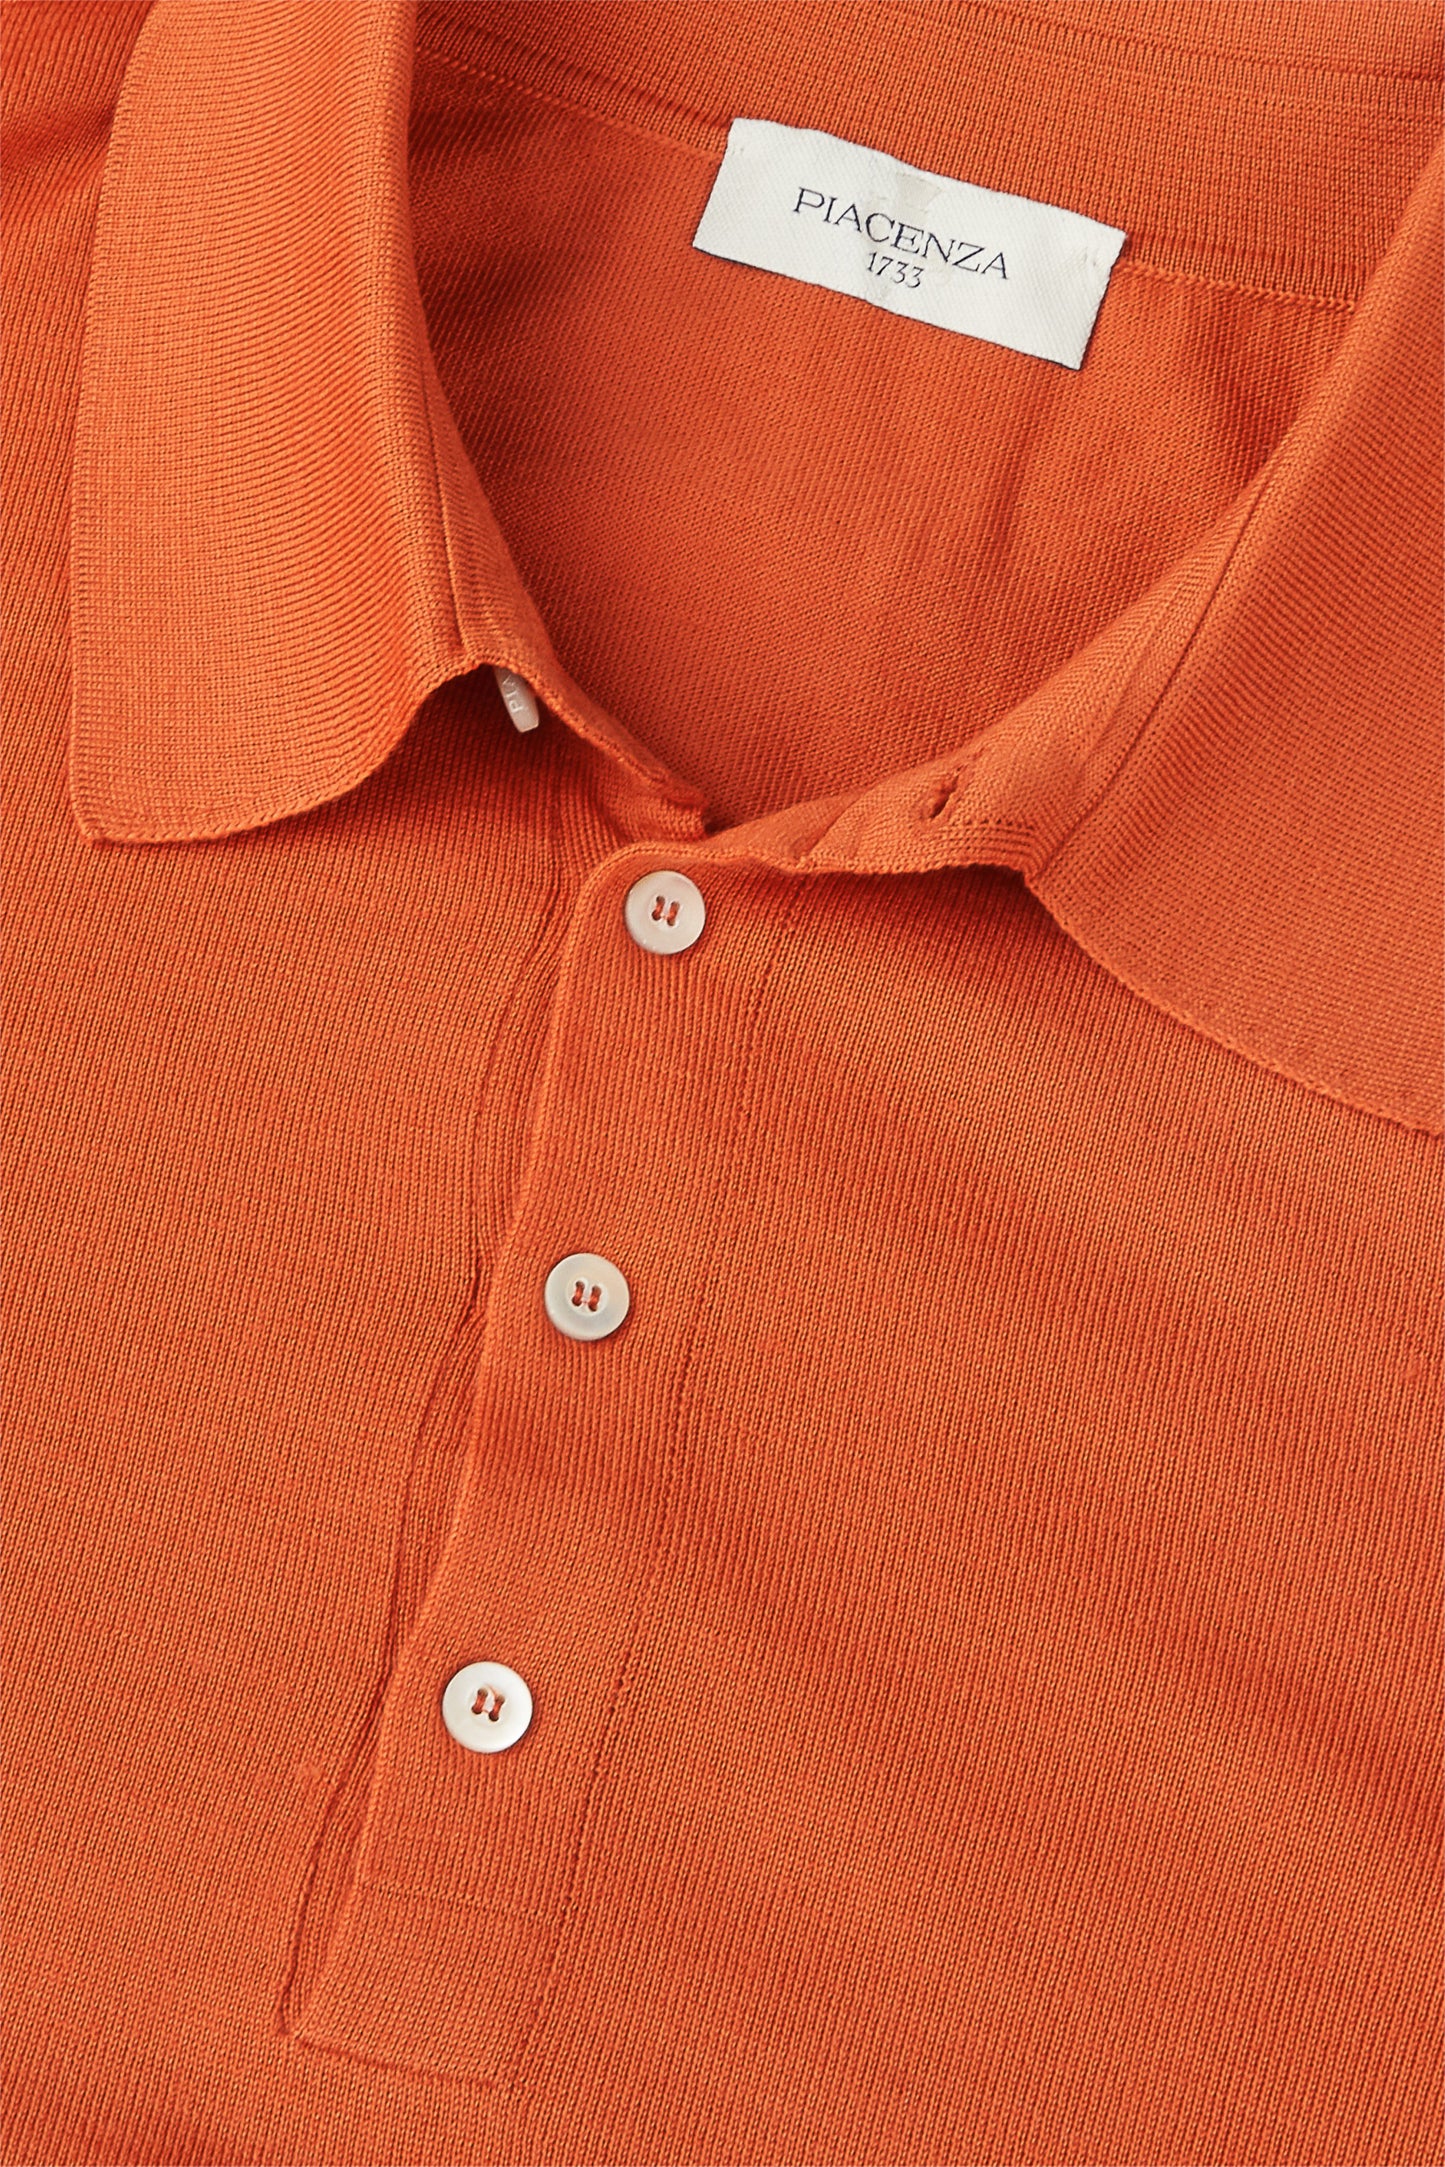 Orange super fine merino wool polo shirt